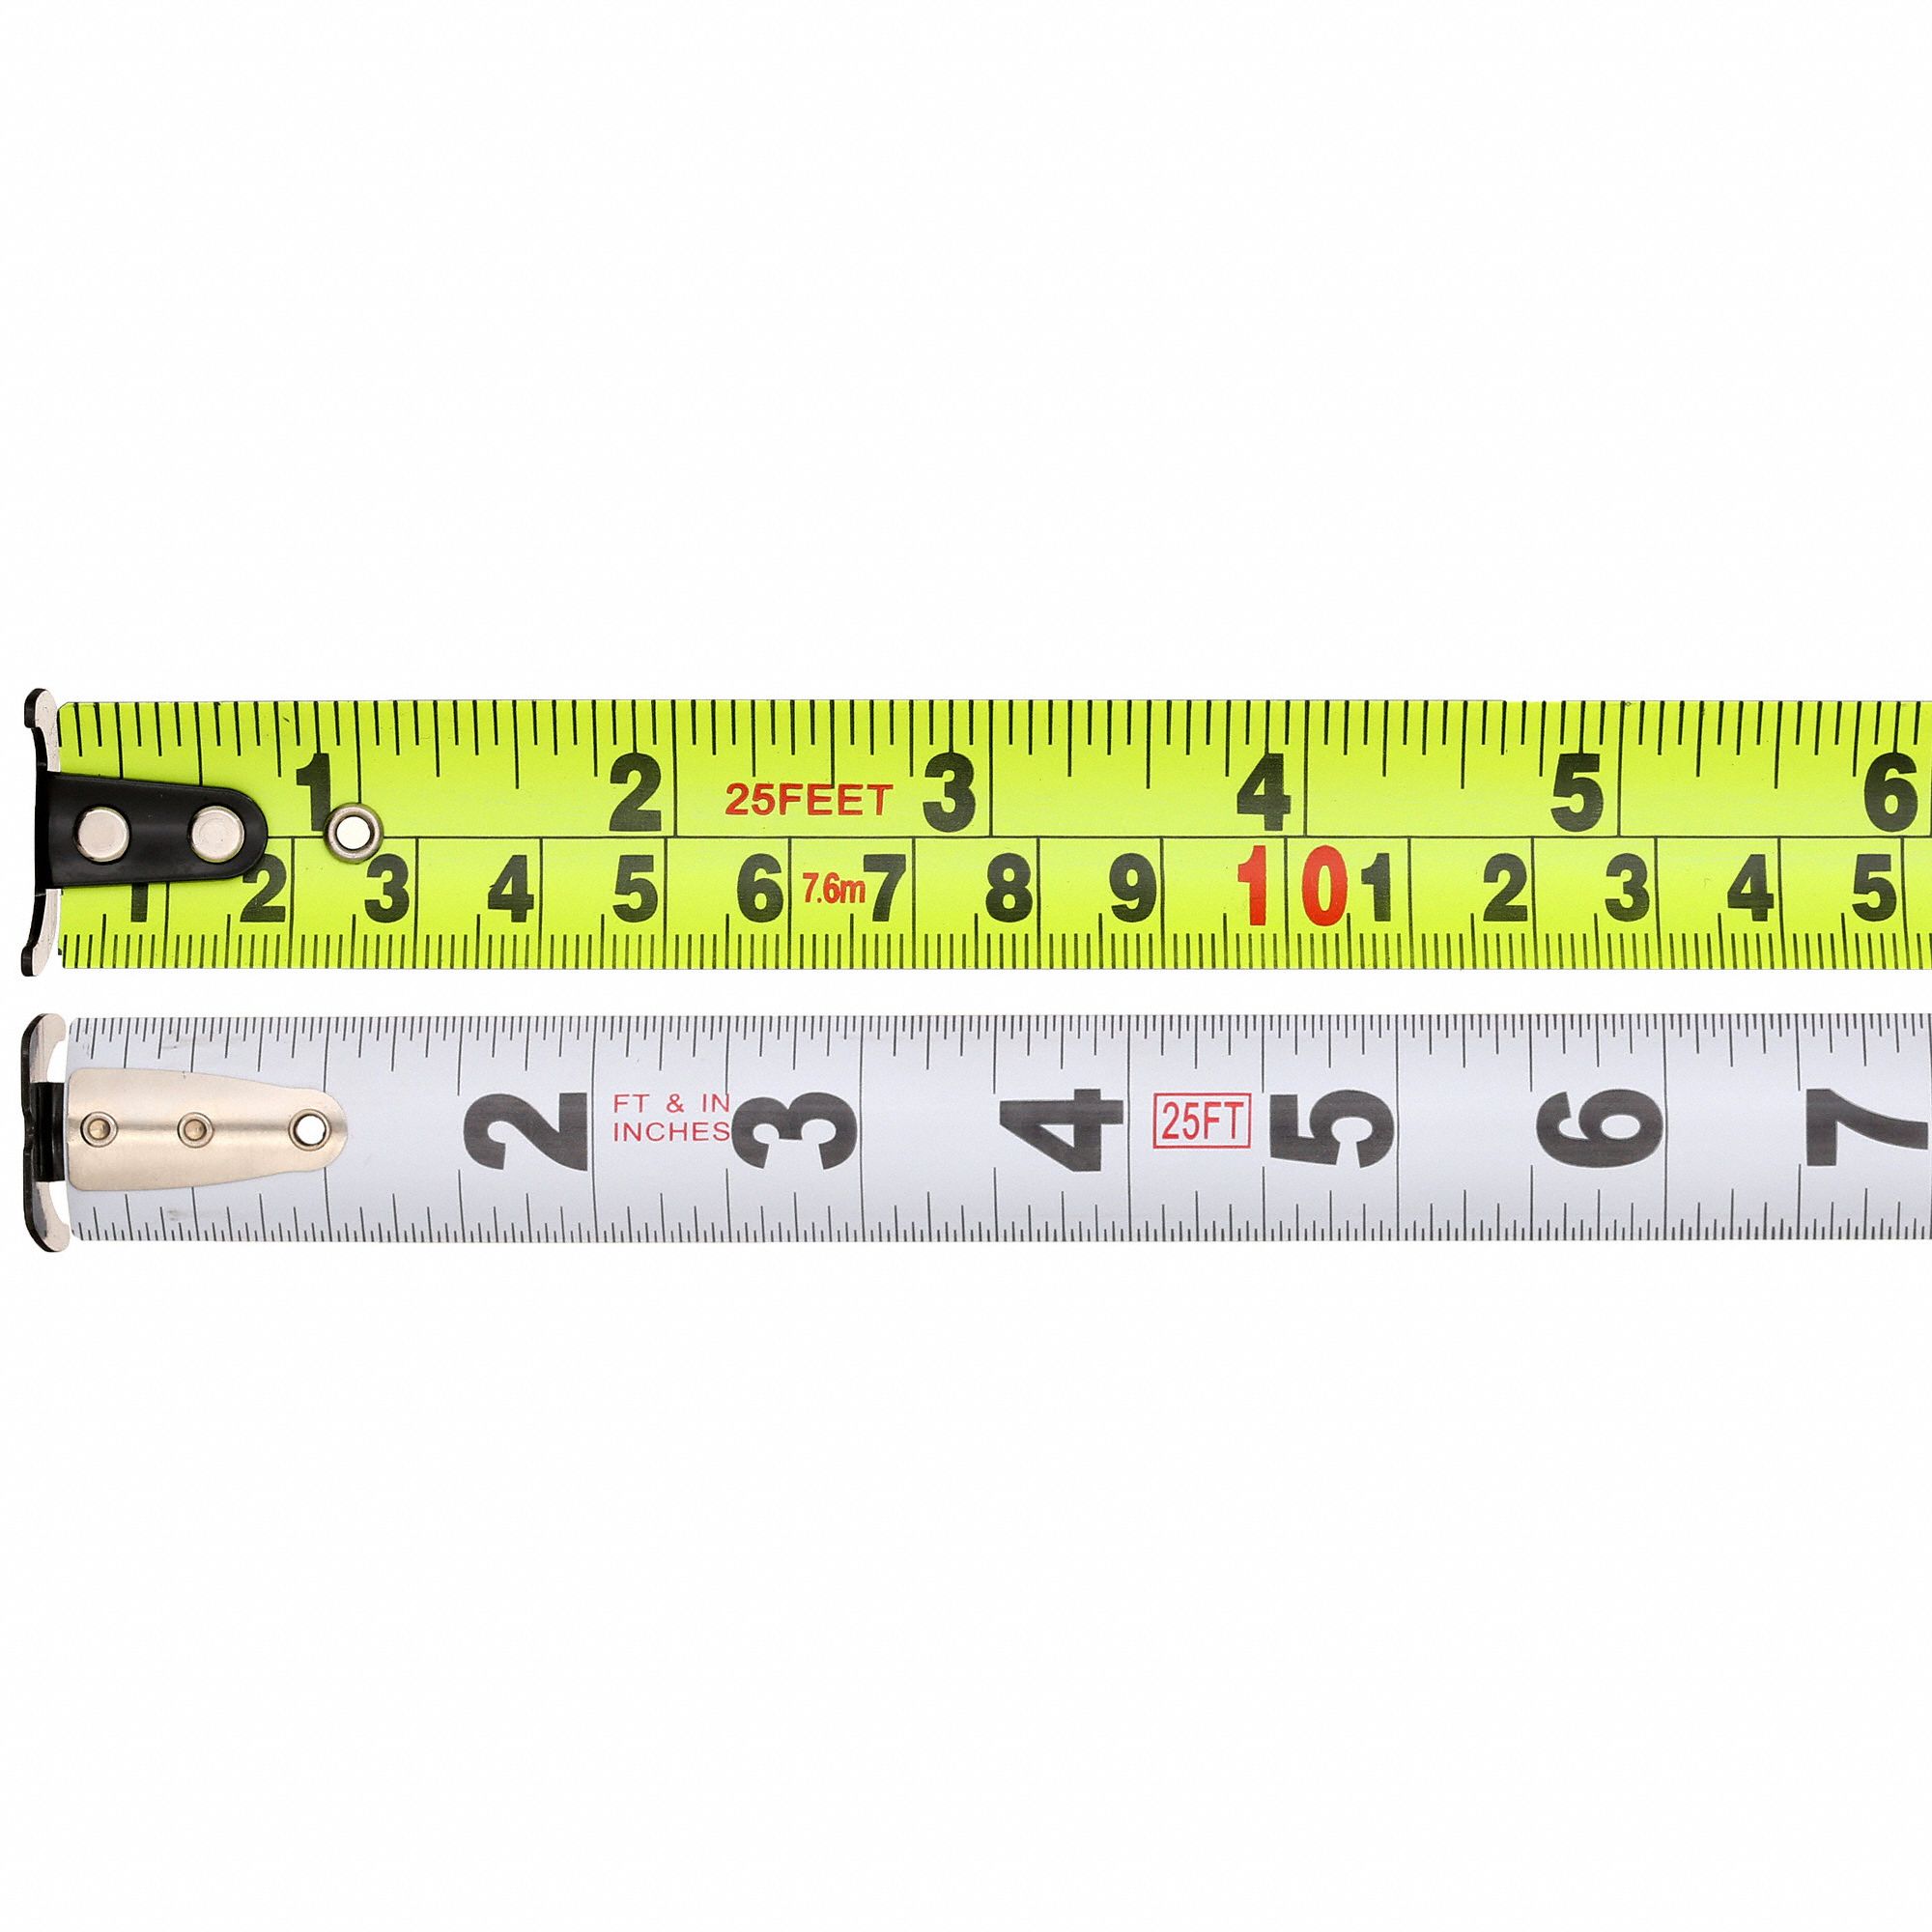 KESON 25 ft Steel SAE/Metric Tape Measure, Orange - 44ZK07|PG18M25UB ...